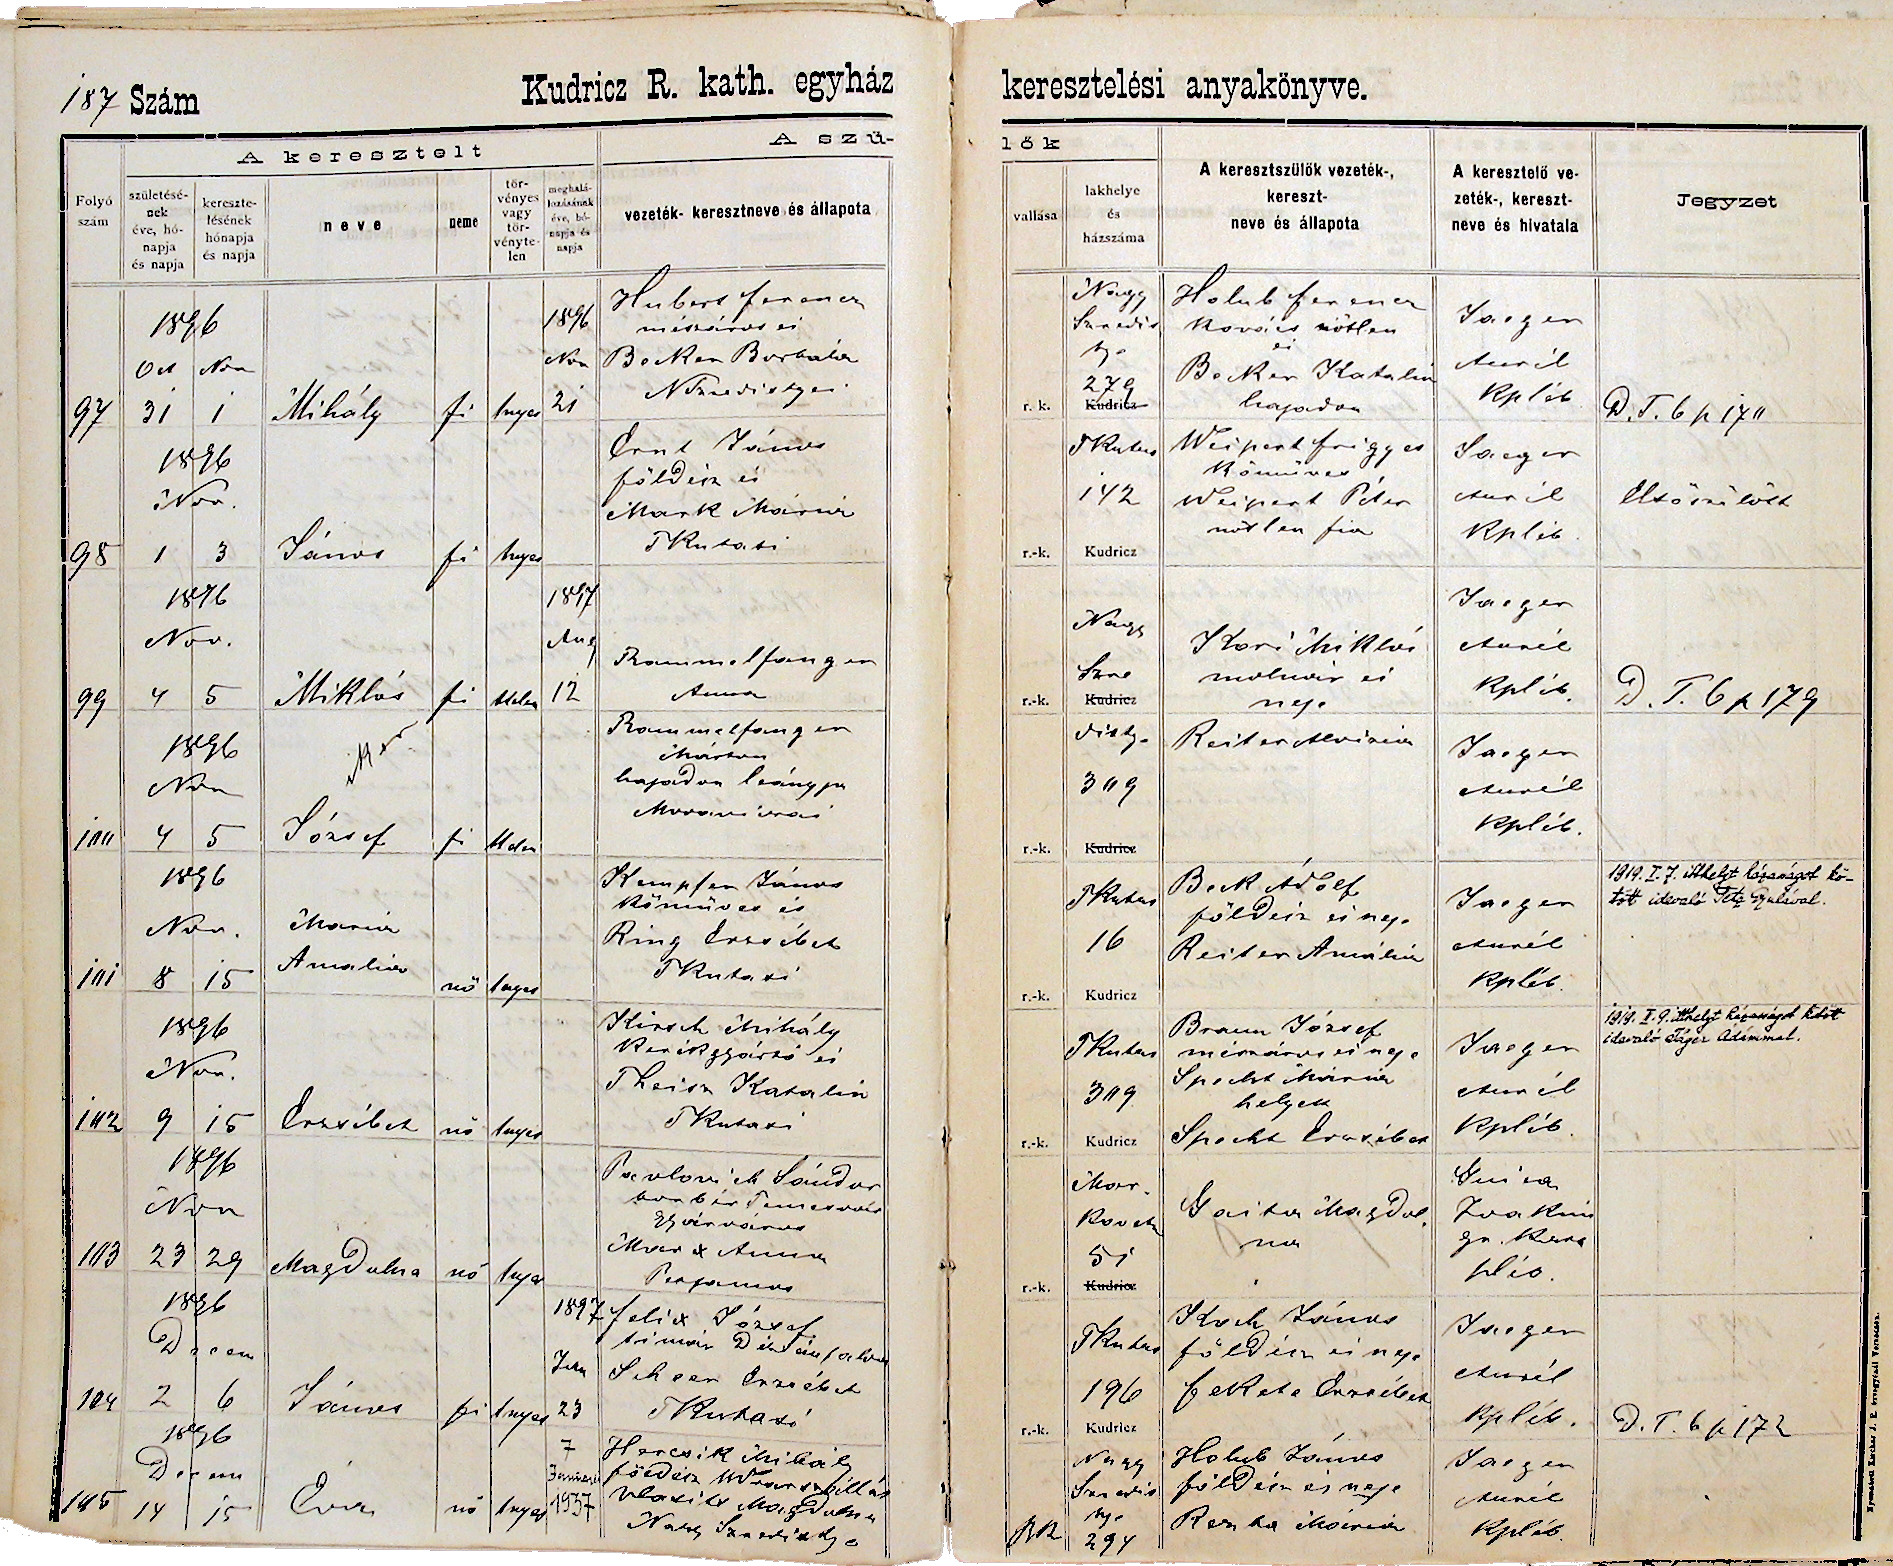 images/church_records/BIRTHS/1884-1899B/1896/187